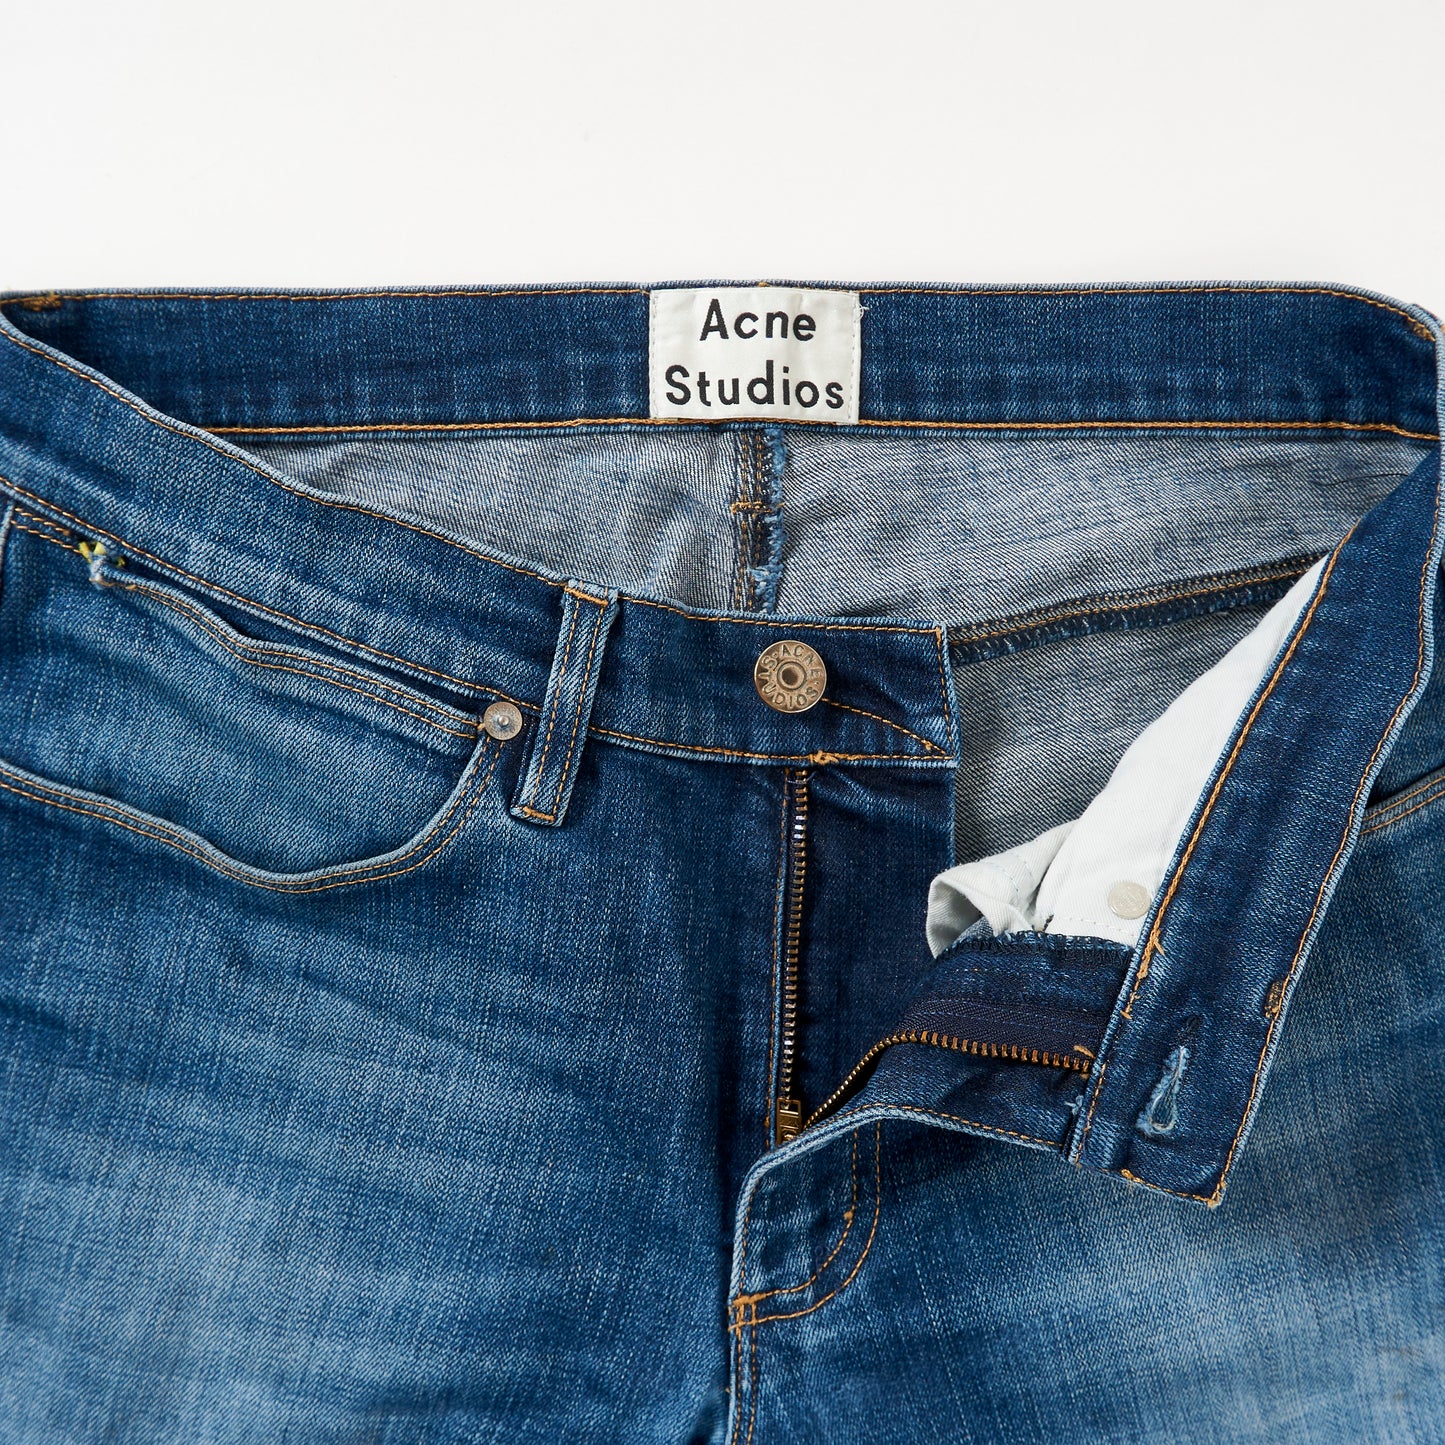 Vintage Acne Studios Light Wash Jeans